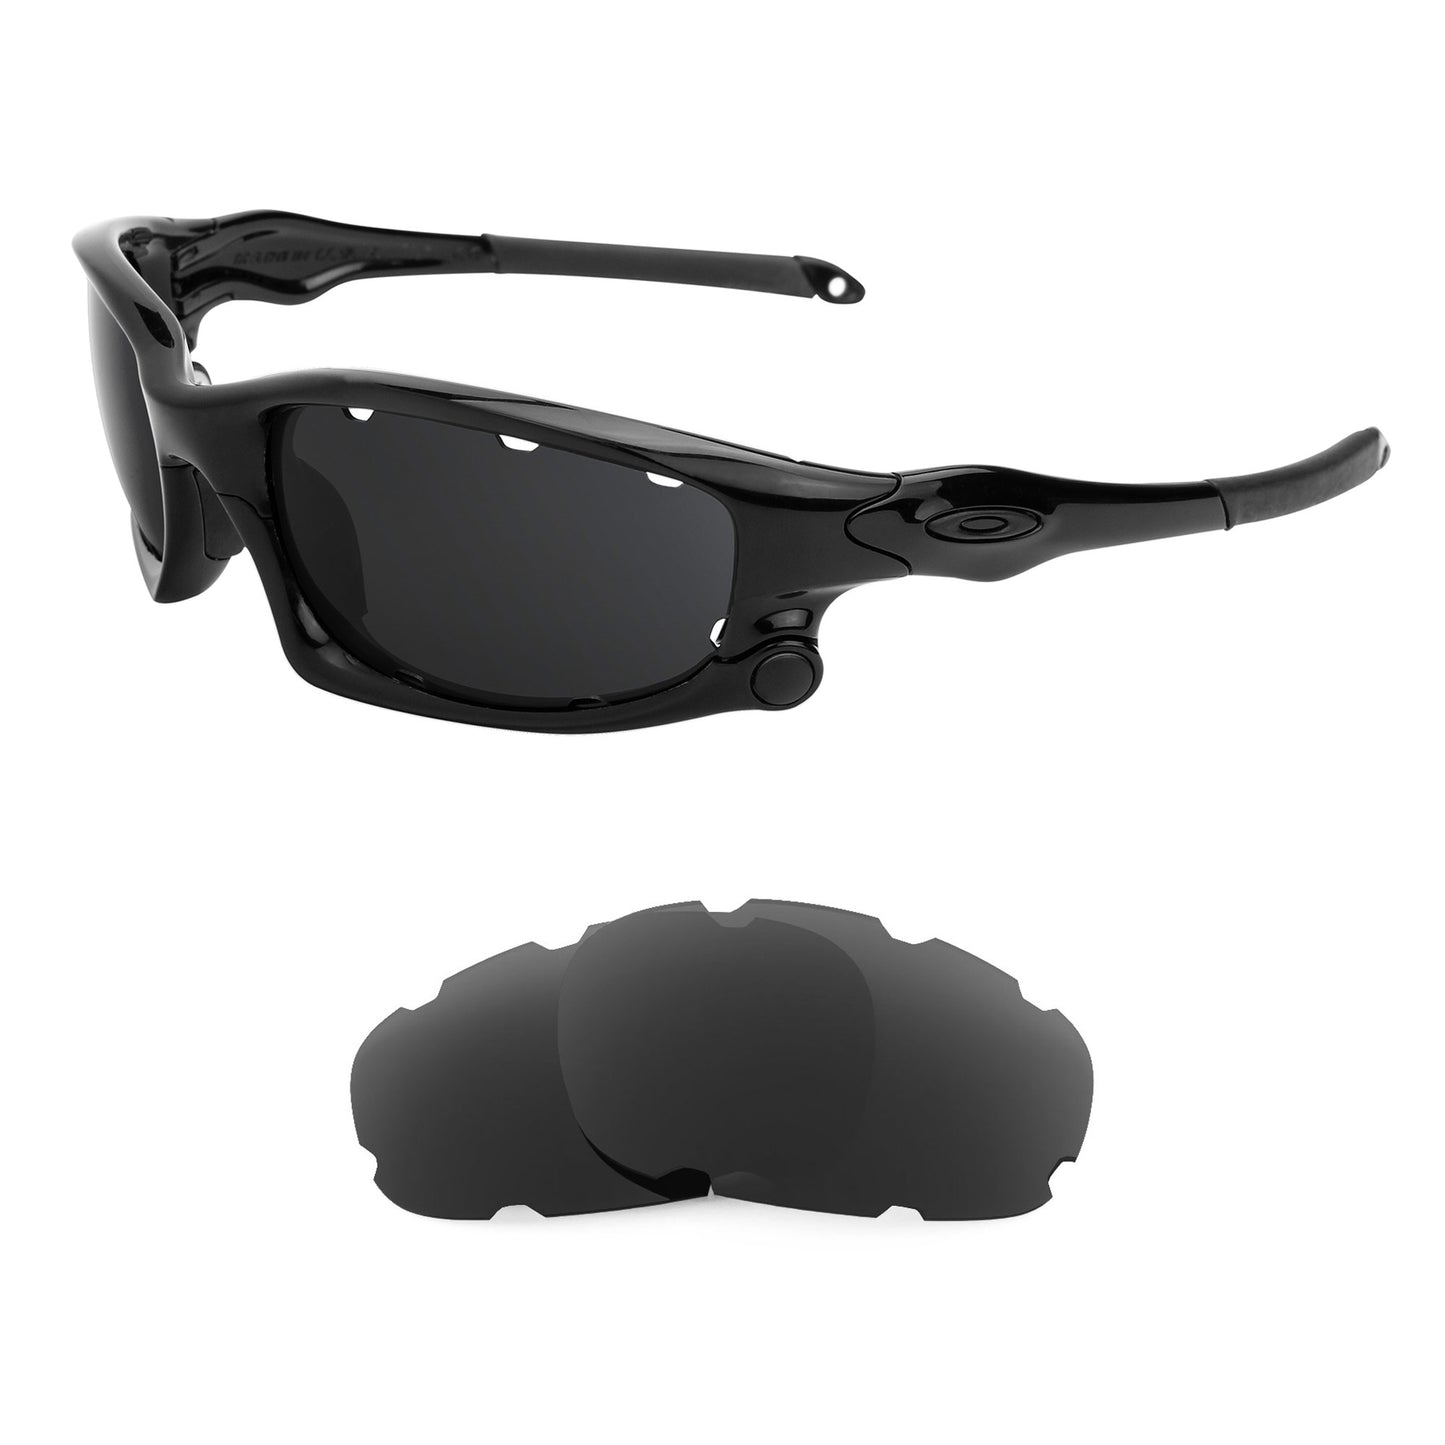 Oakley Split Jacket Vented (Low Bridge Fit) sunglasses with replacement lenses